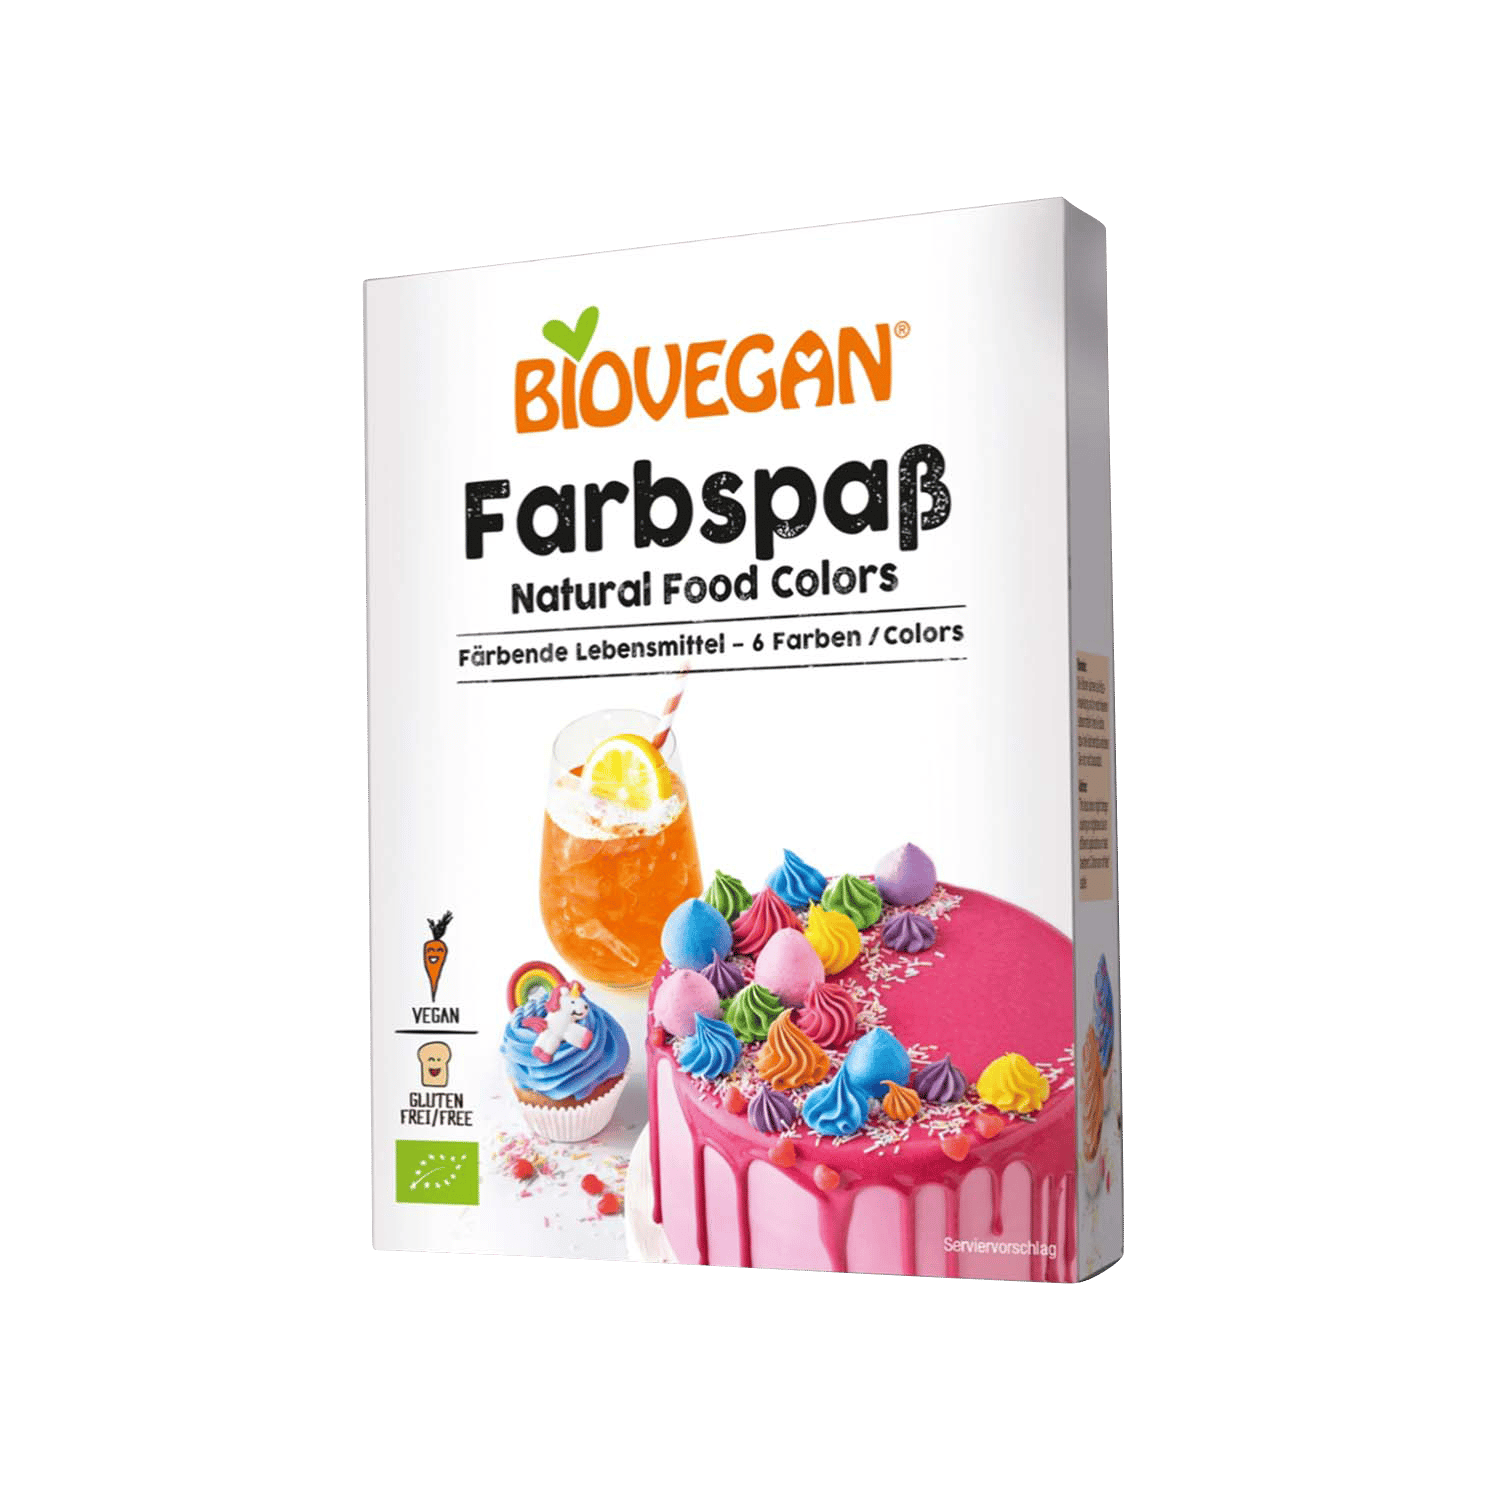 Farbspass Coloring Food, Organic, 48g